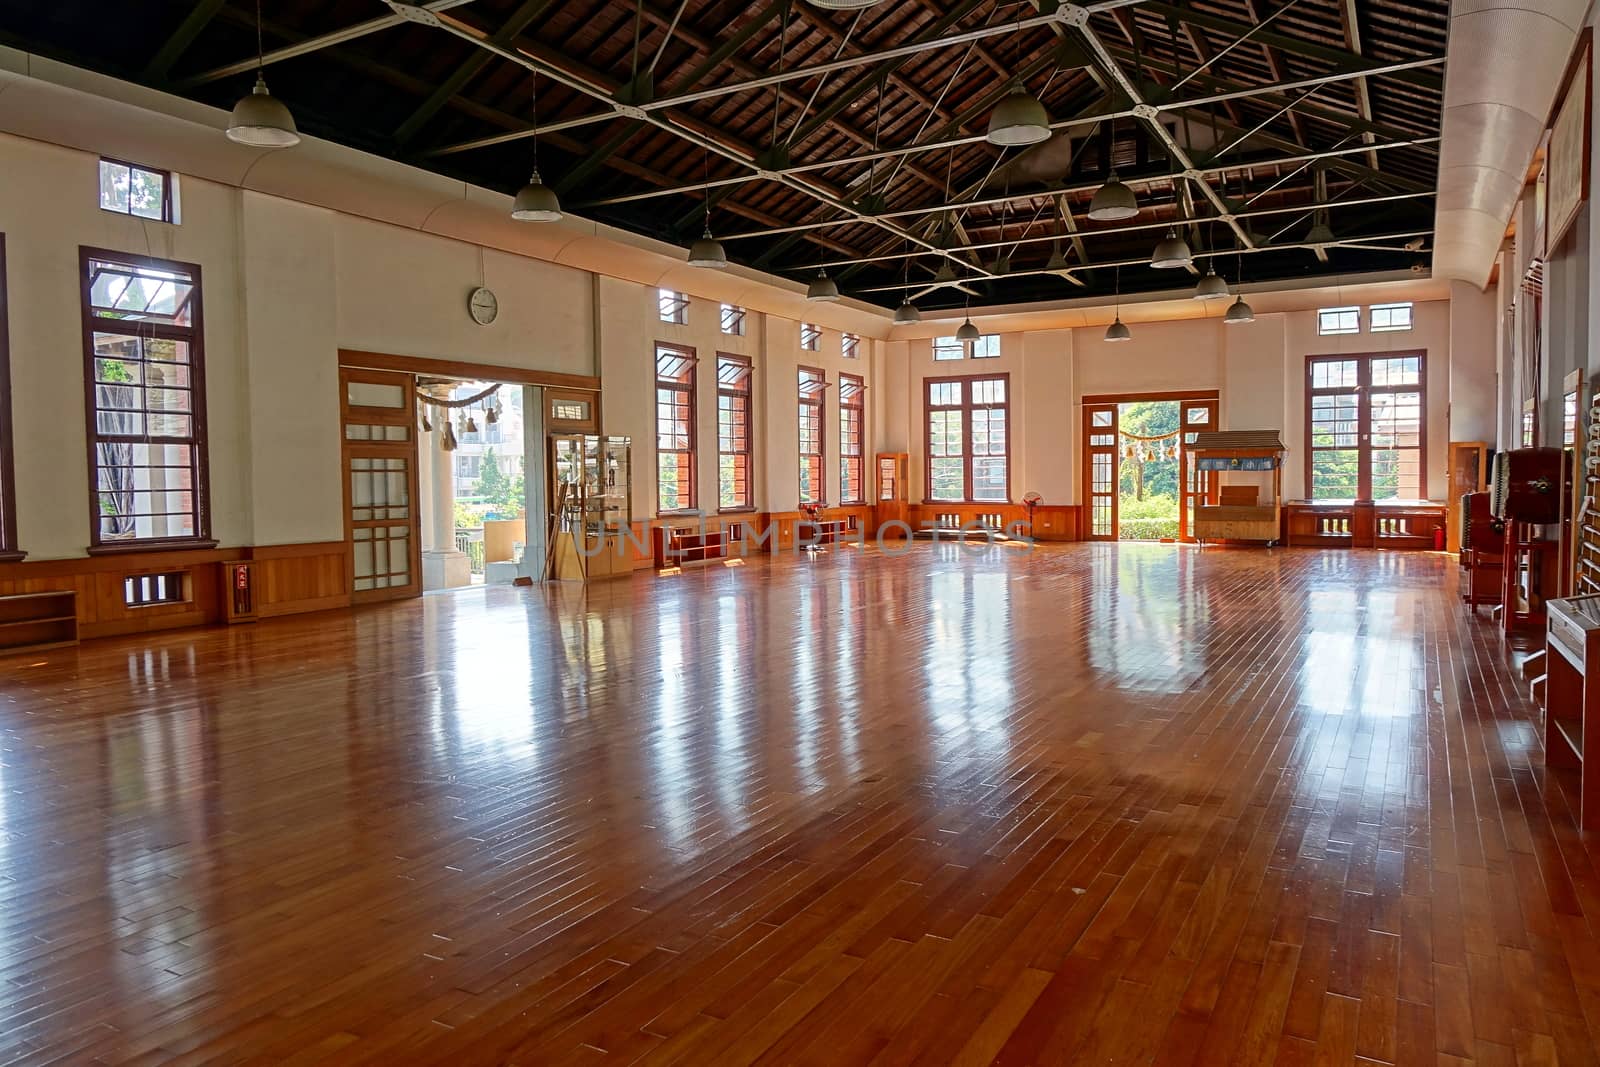 Main Room of the Wu De Martial Arts Hall by shiyali